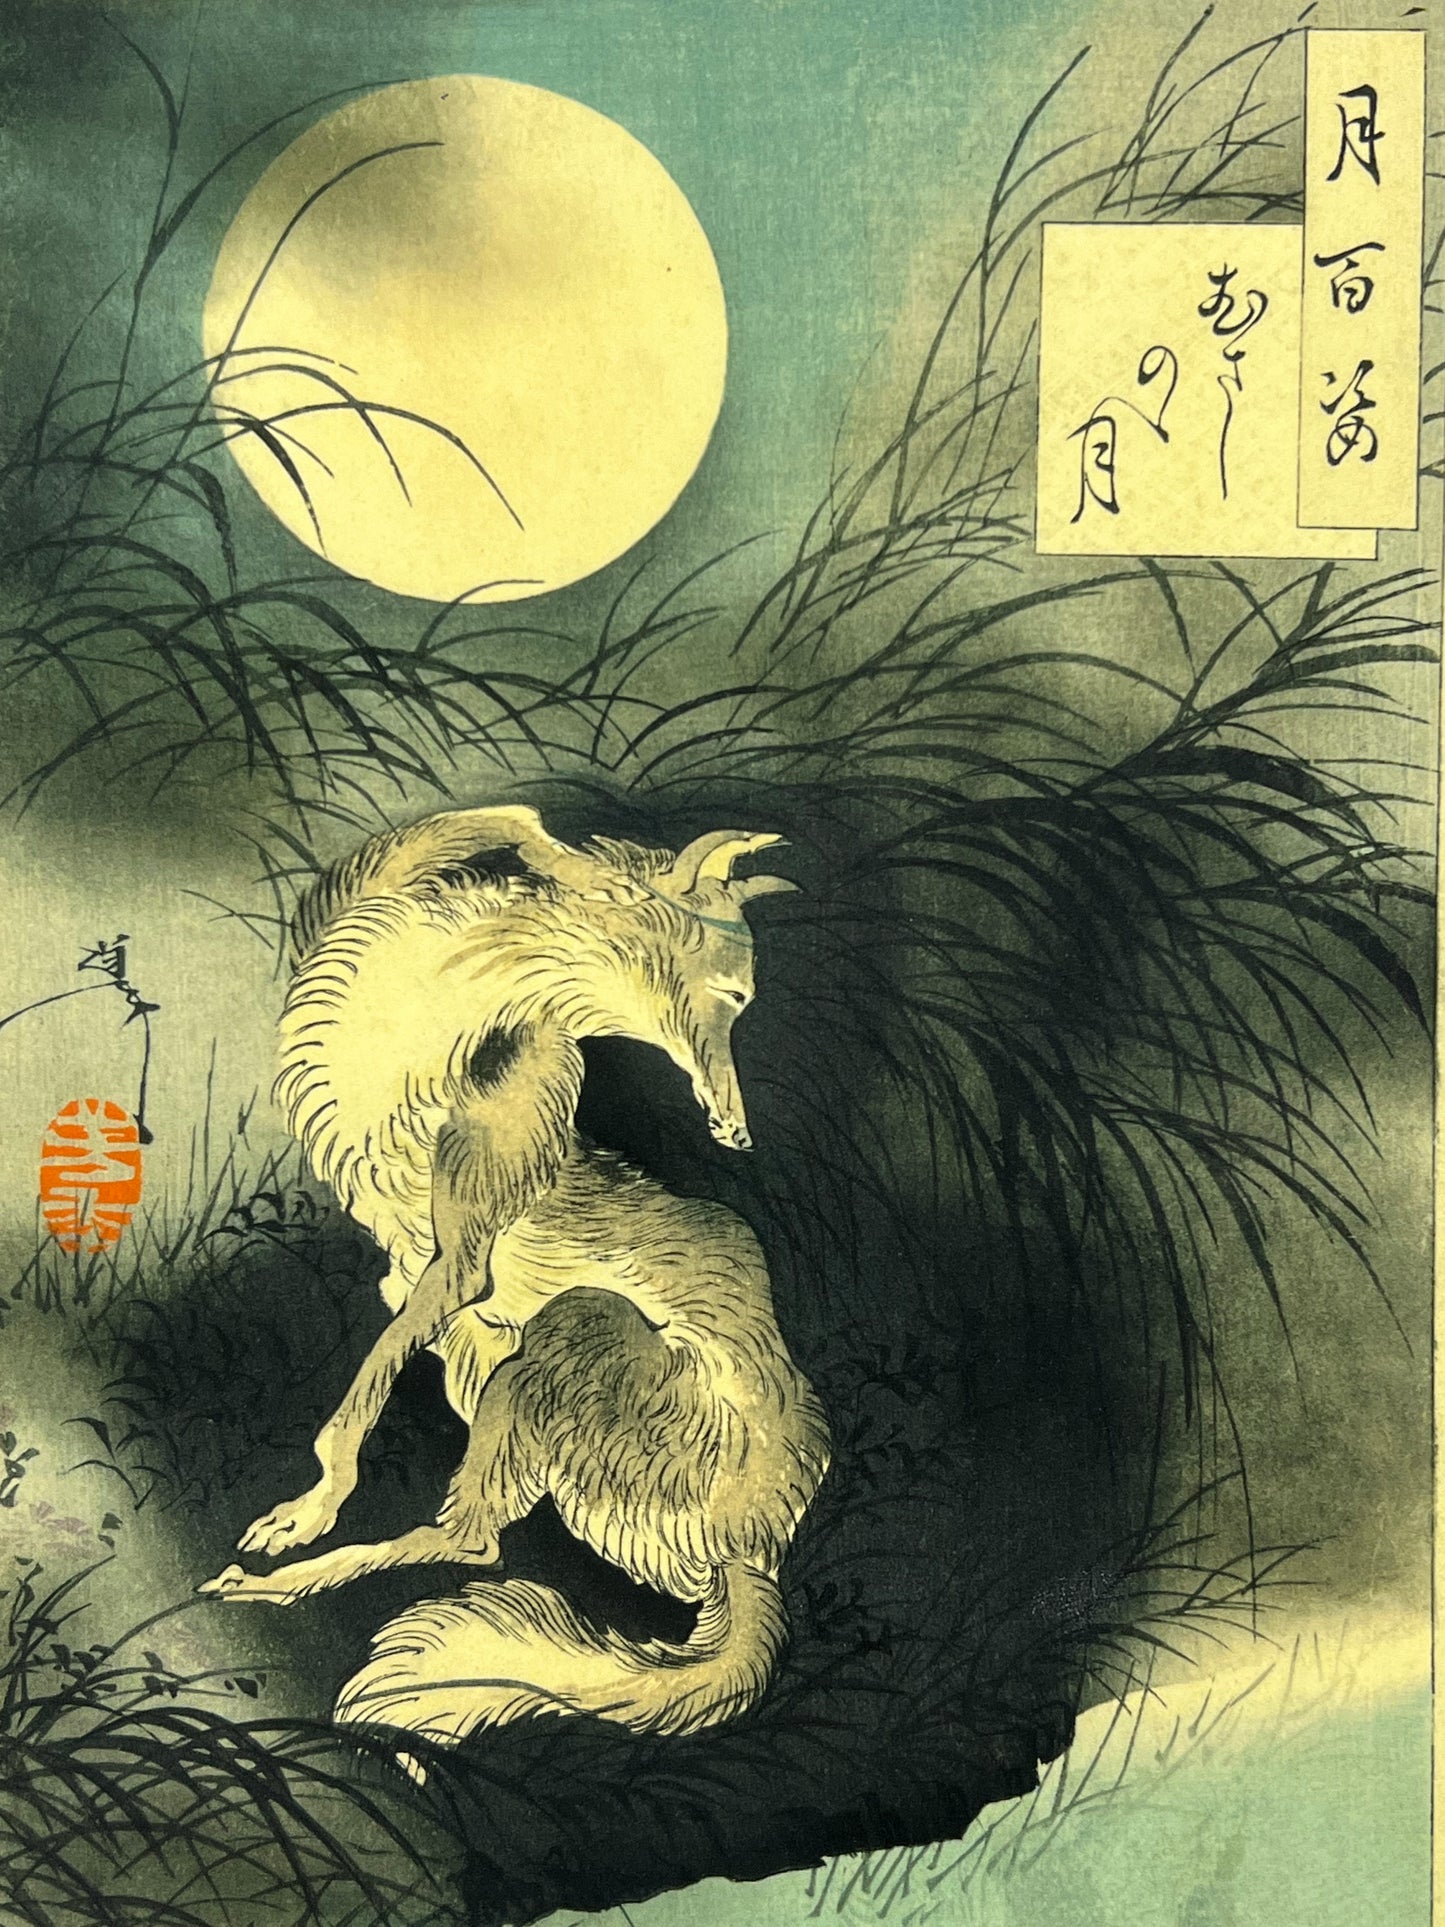 Yoshitoshi Giclee Woodblock Print "Musashi Plain Moon" 100 Views of the Moon 7"x10"